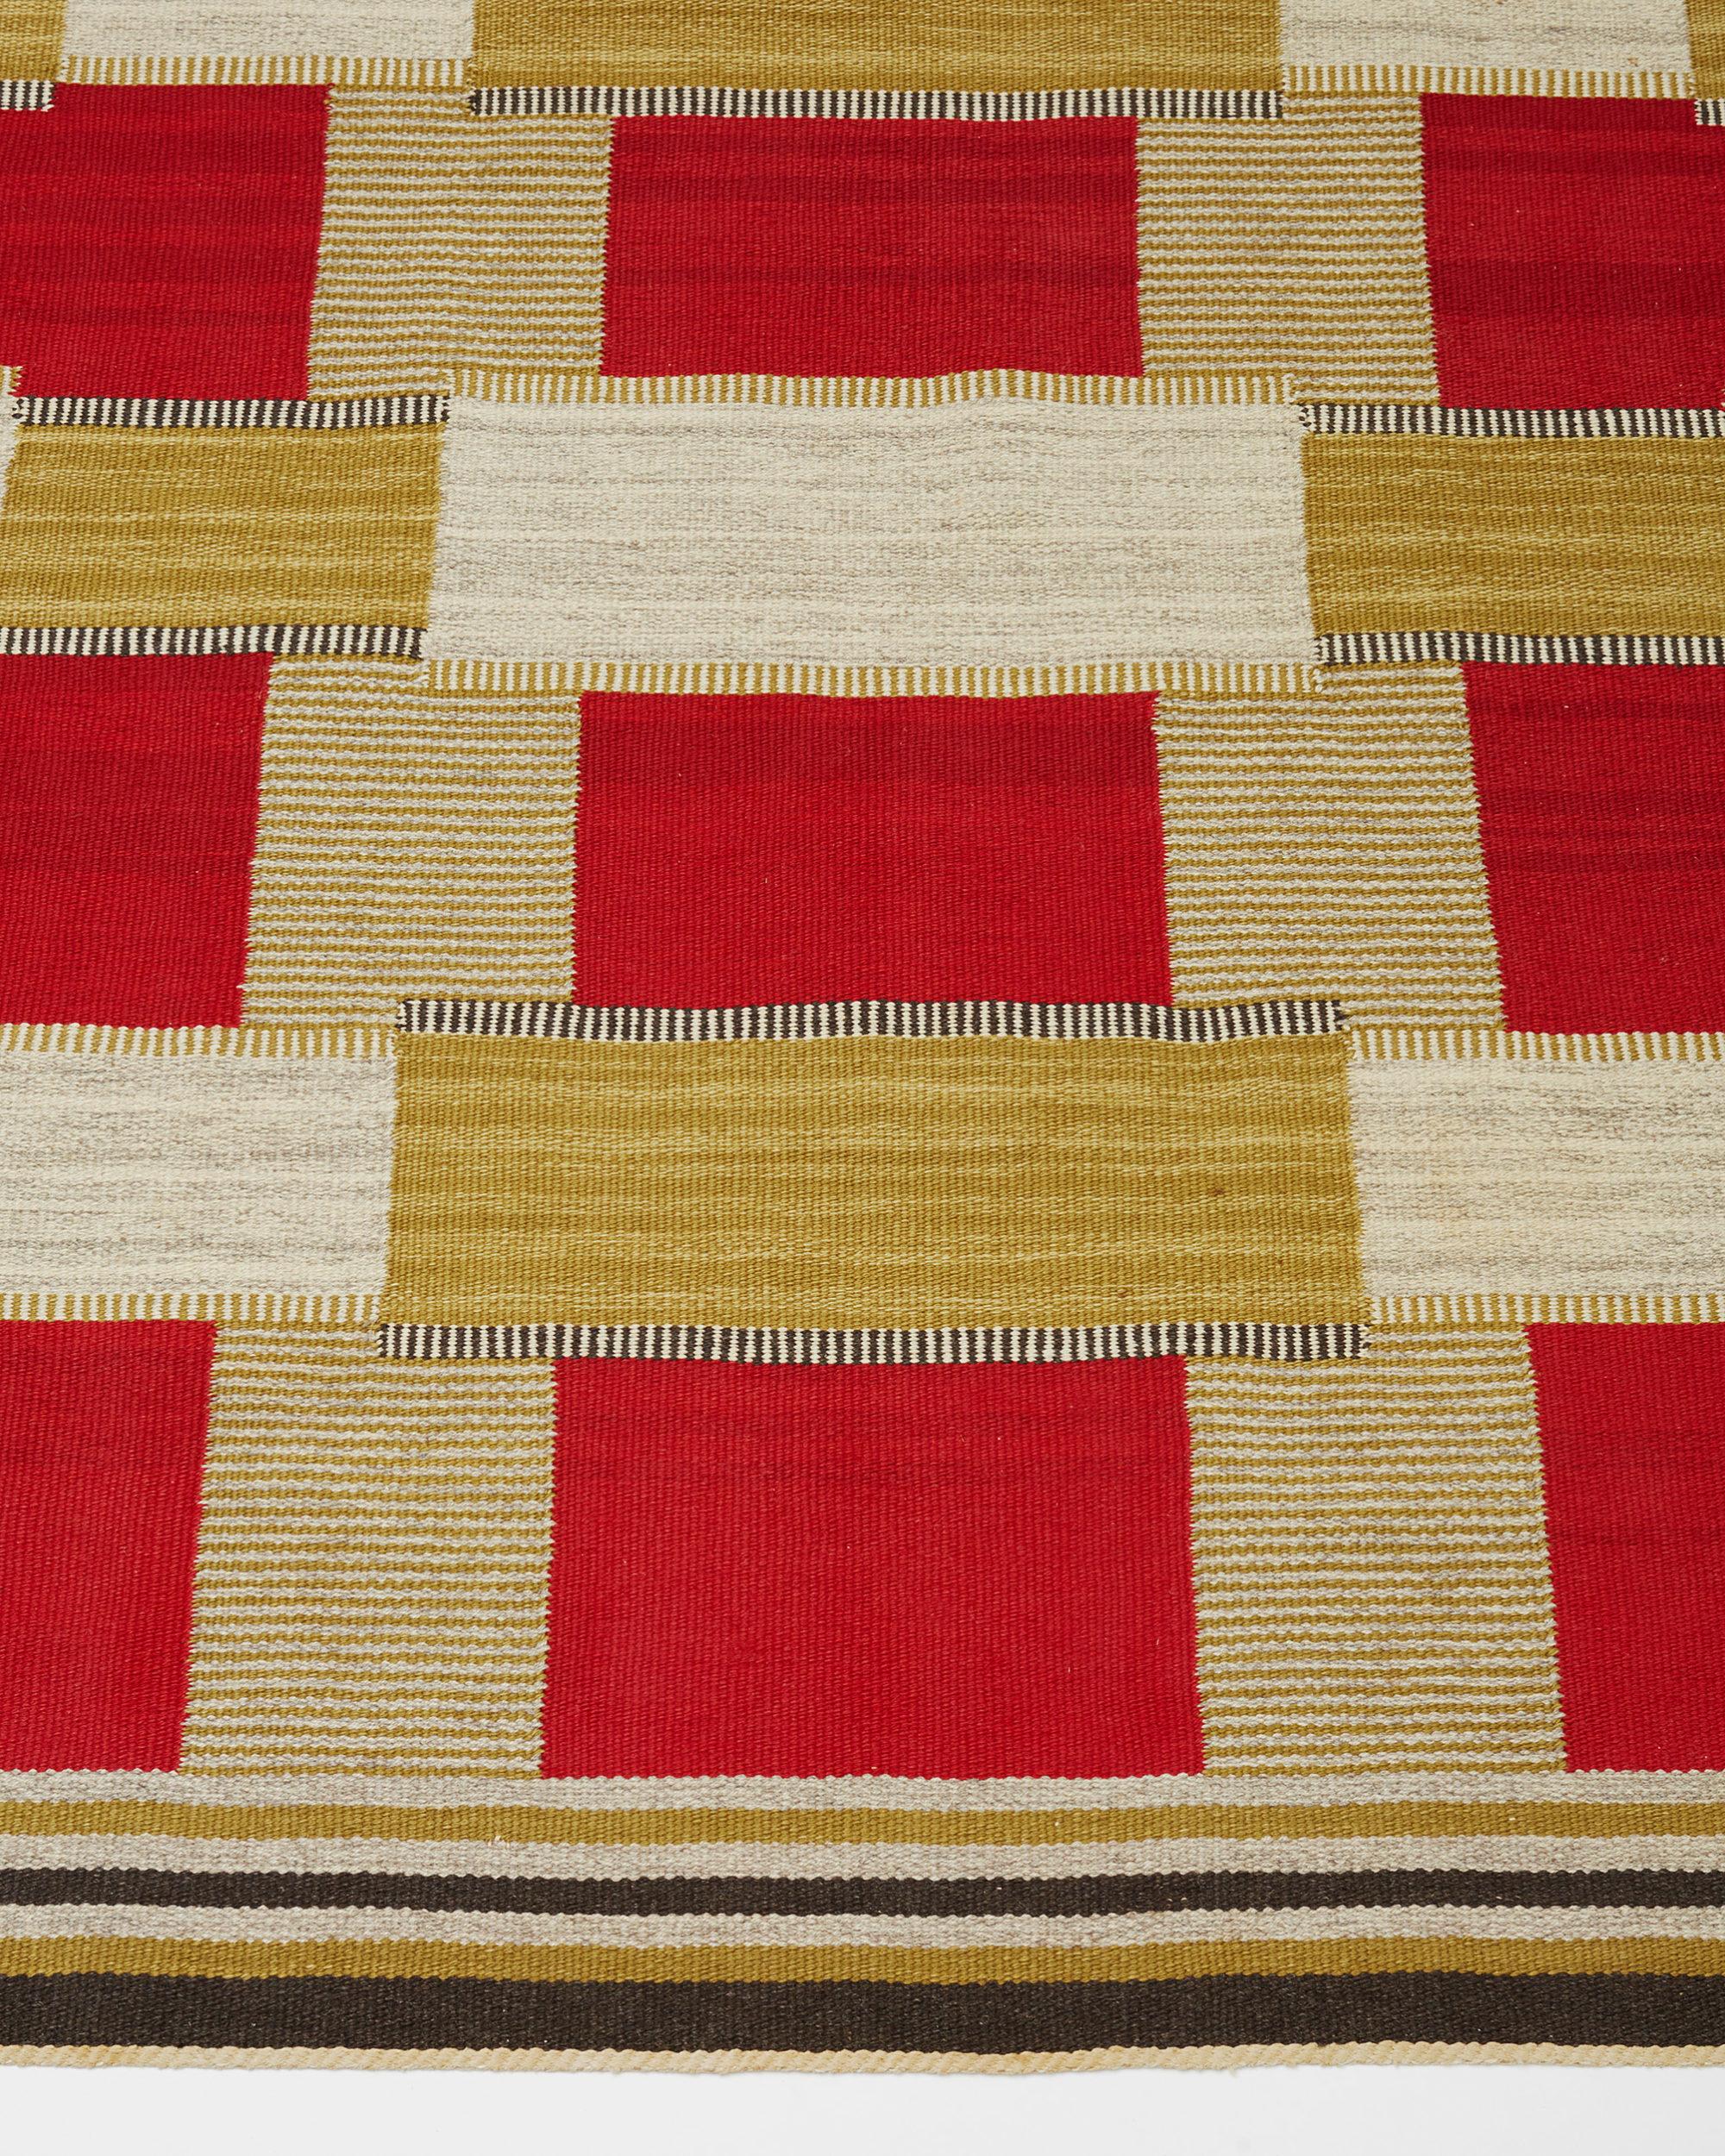 Rug, anonymous, Sweden, 1950s.
Kelim technique. Handwoven wool.

Measures: L 300 cm/ 9 10 1/2